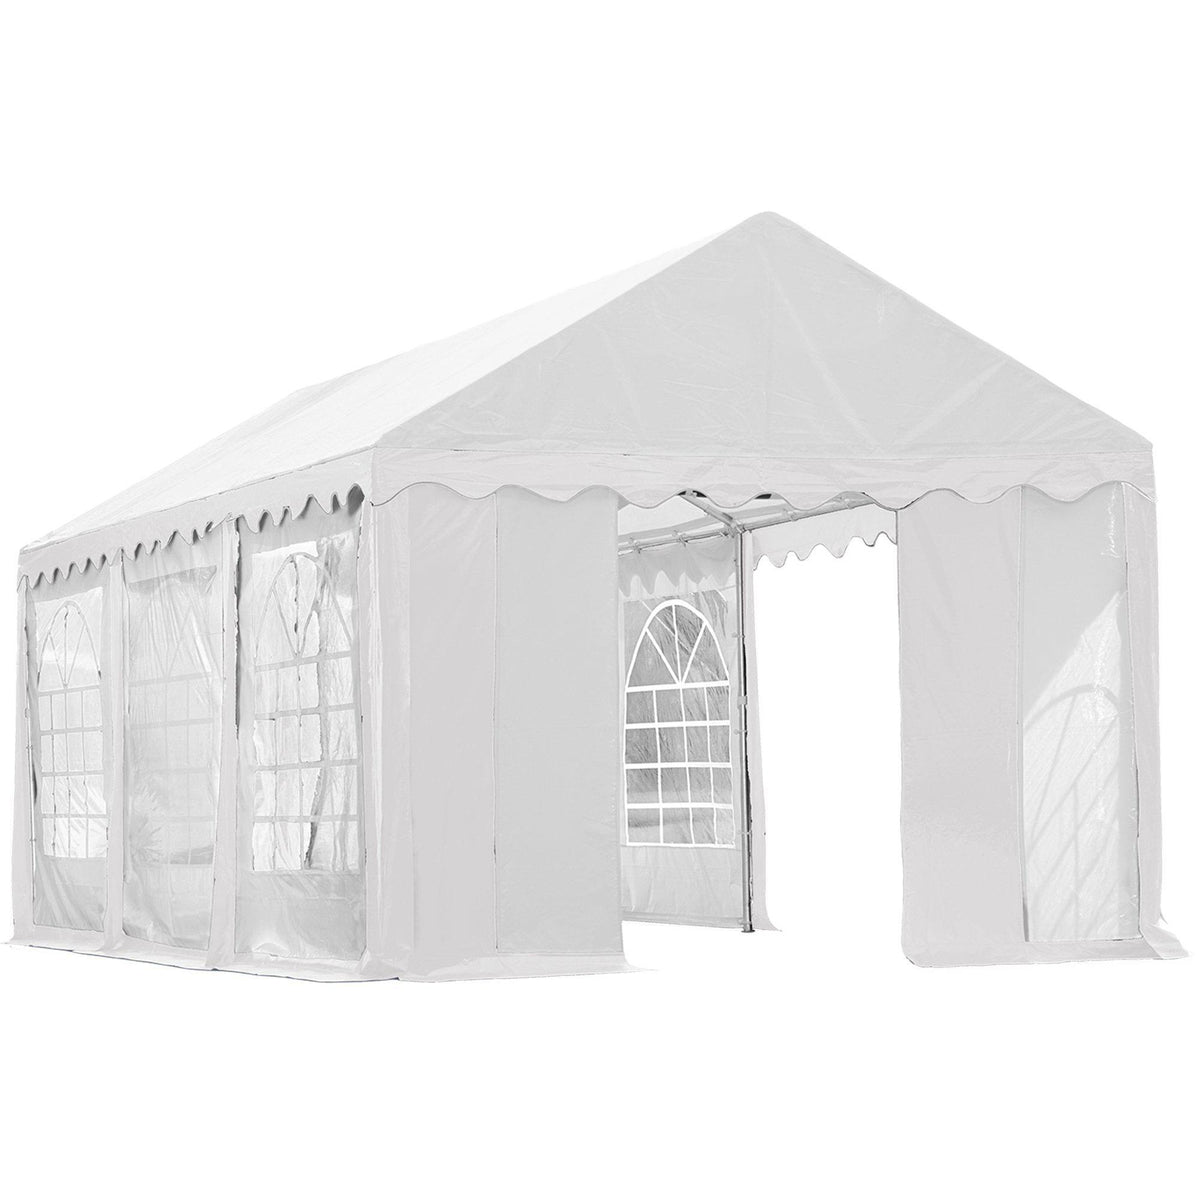 ShelterLogic Party Tent with Enclosure Kit, White, 10 x 20 ft.